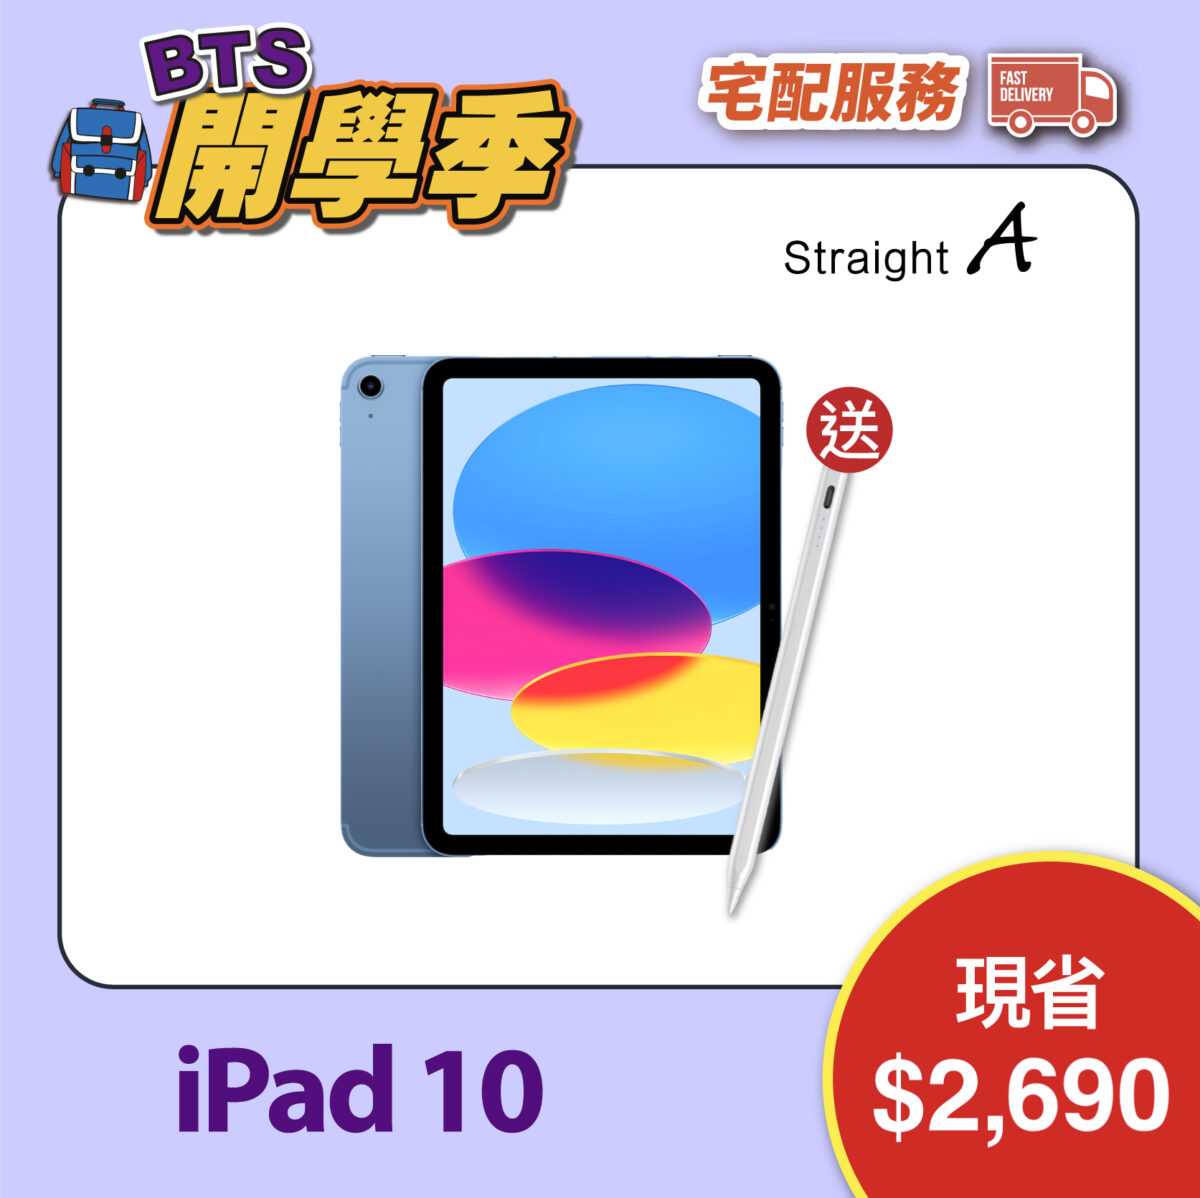 Mac iPad MacBook Air MacBook Pro iPad iPad mini iPad Air iPad Pro Straight A BTS 優惠